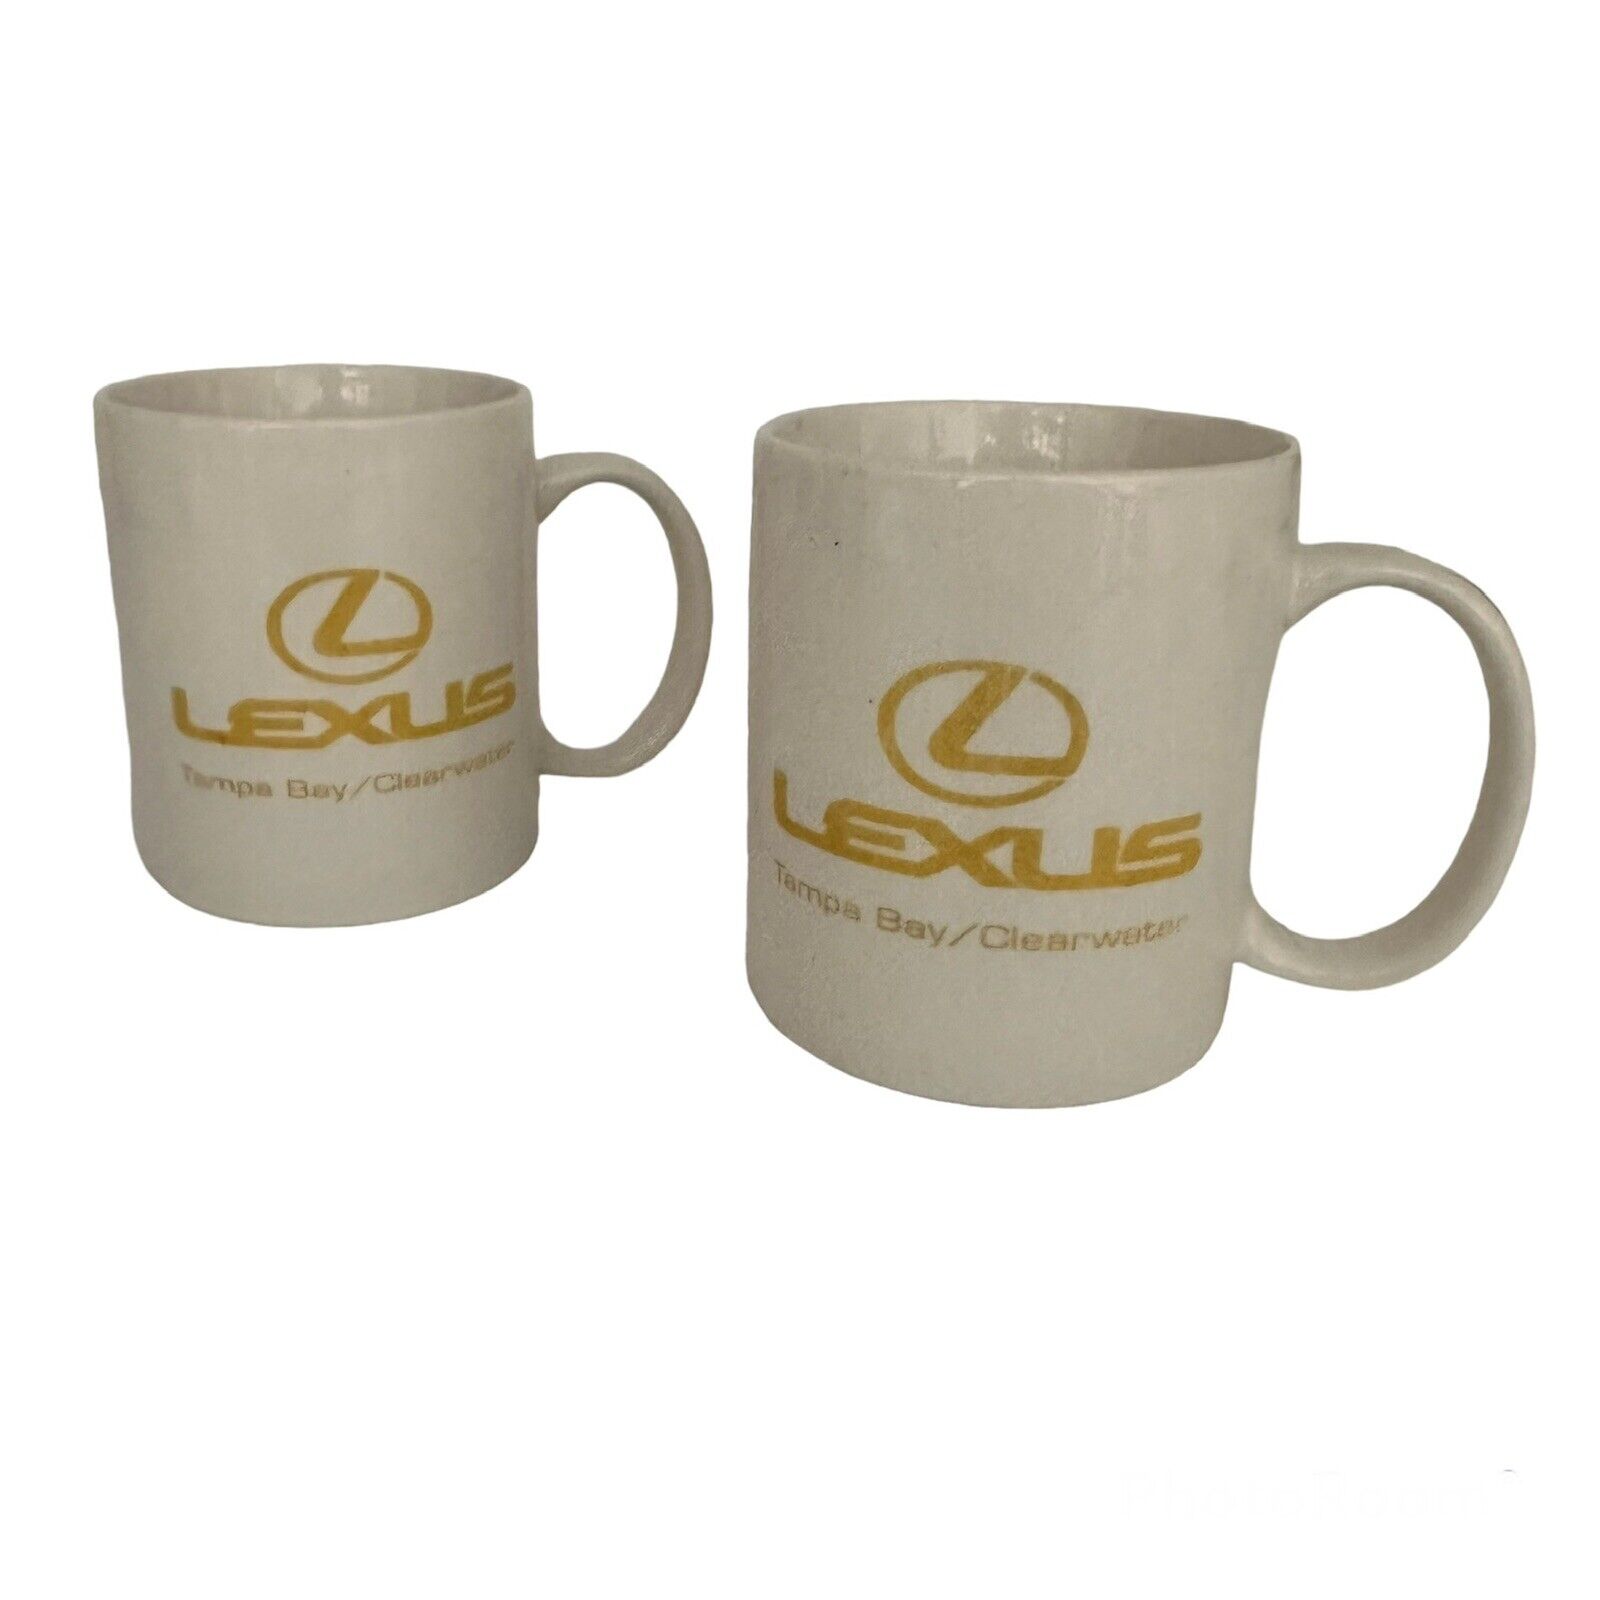 Lexus Coffee Tea 2 Mugs Ceramic White With Gold Logo Tampa Bay Clearwater FL